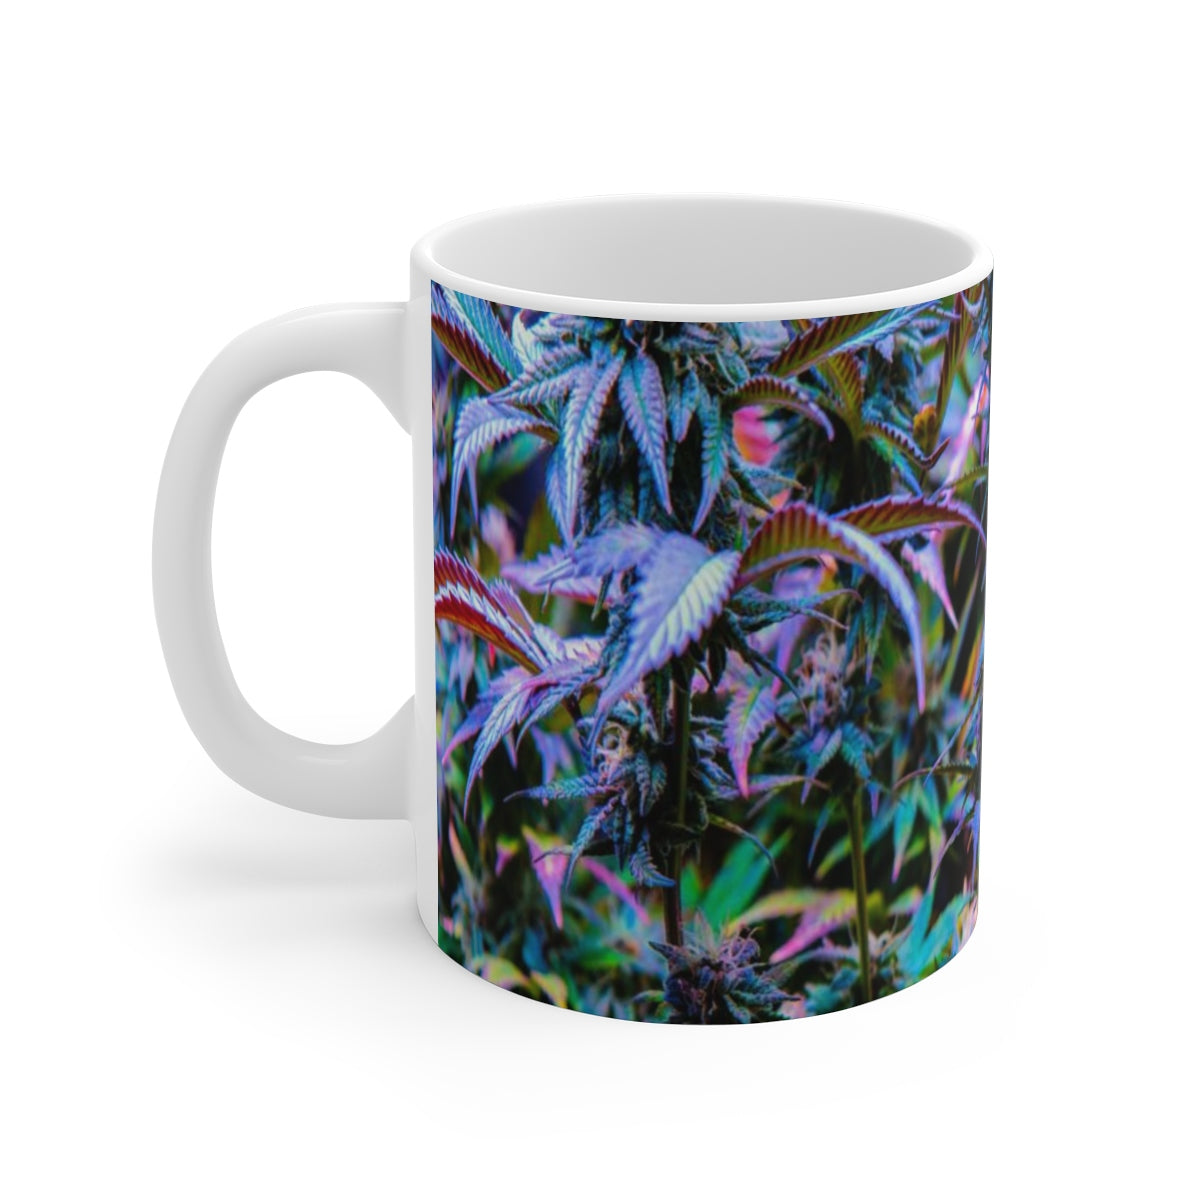 The Rainbow Cannabis White Ceramic Mug